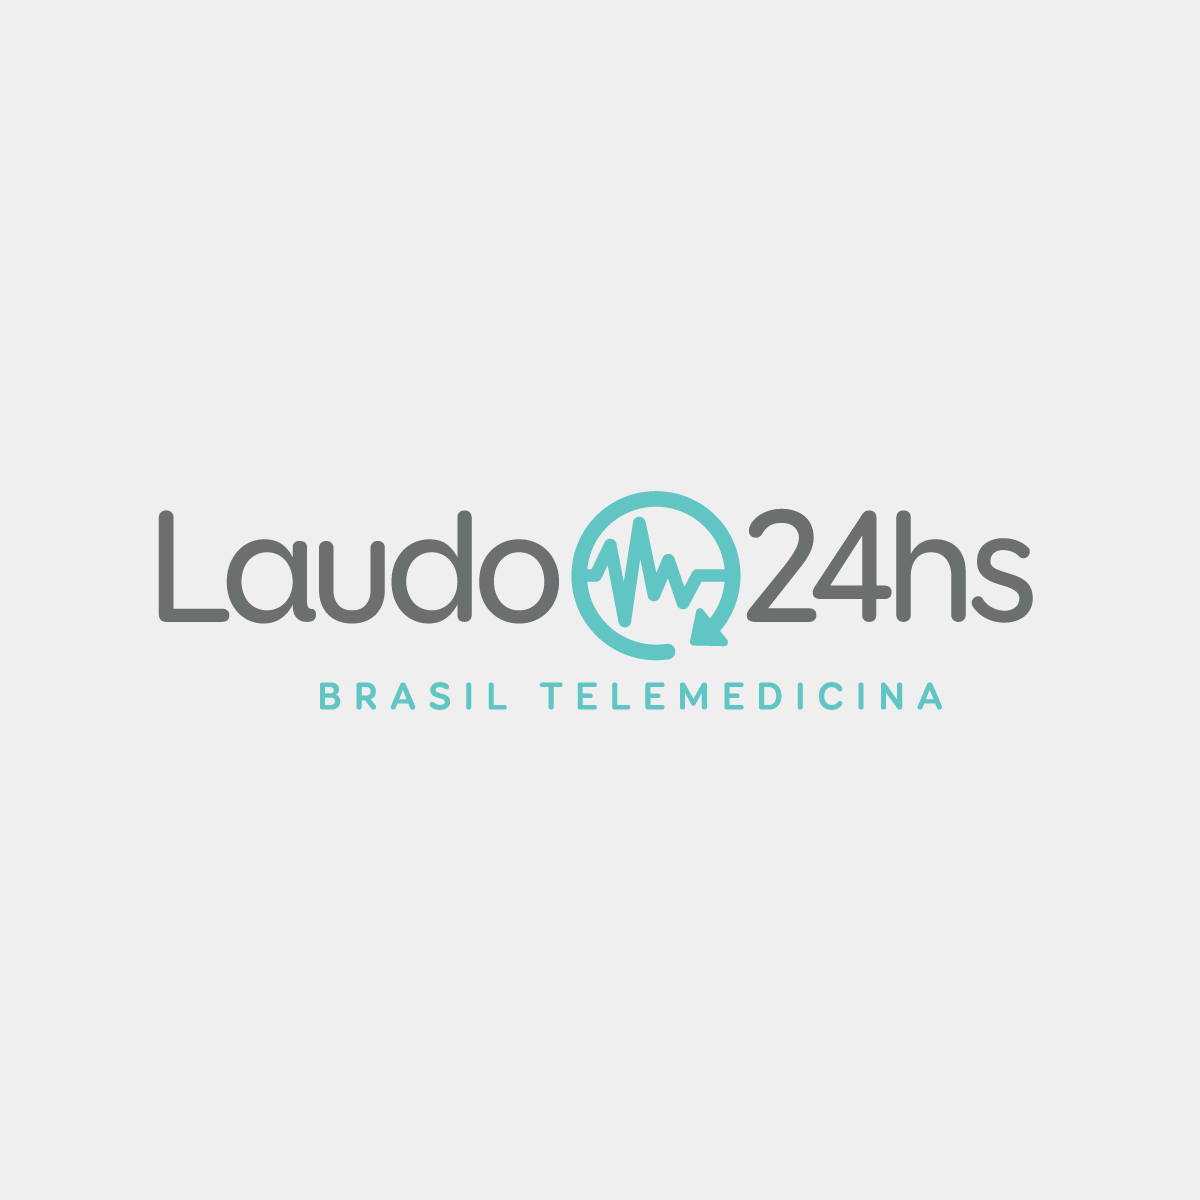 https://www.brasiltelemedicina.com.br/wp-content/uploads/2016/07/Website_Prosutos_Laudo24hs-1200x1200.png